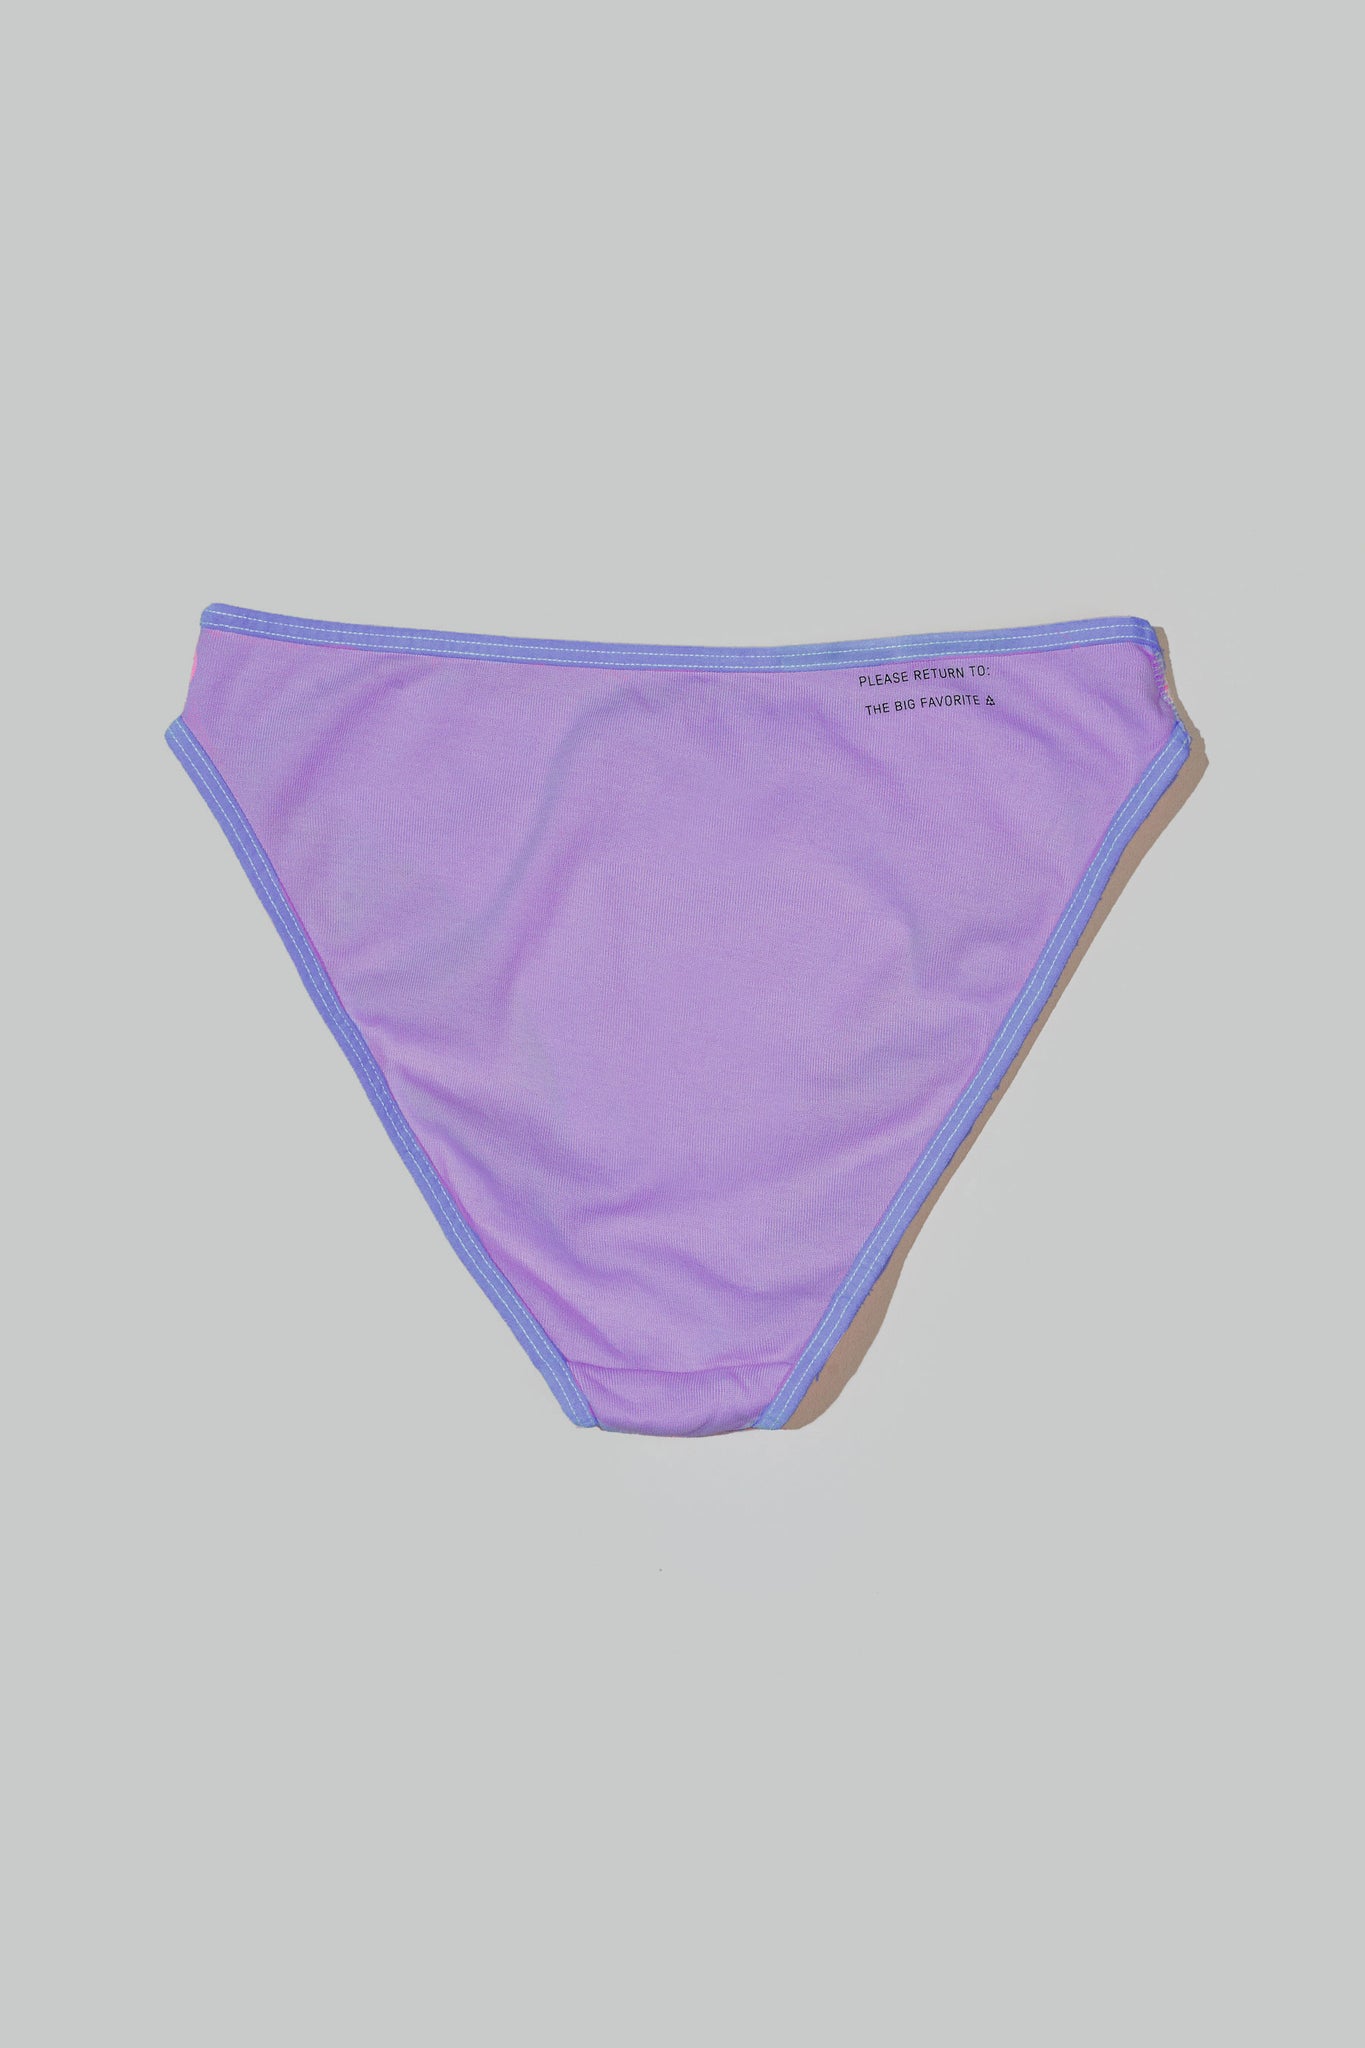 a bikini brief in lovely lilac purple laid flat 